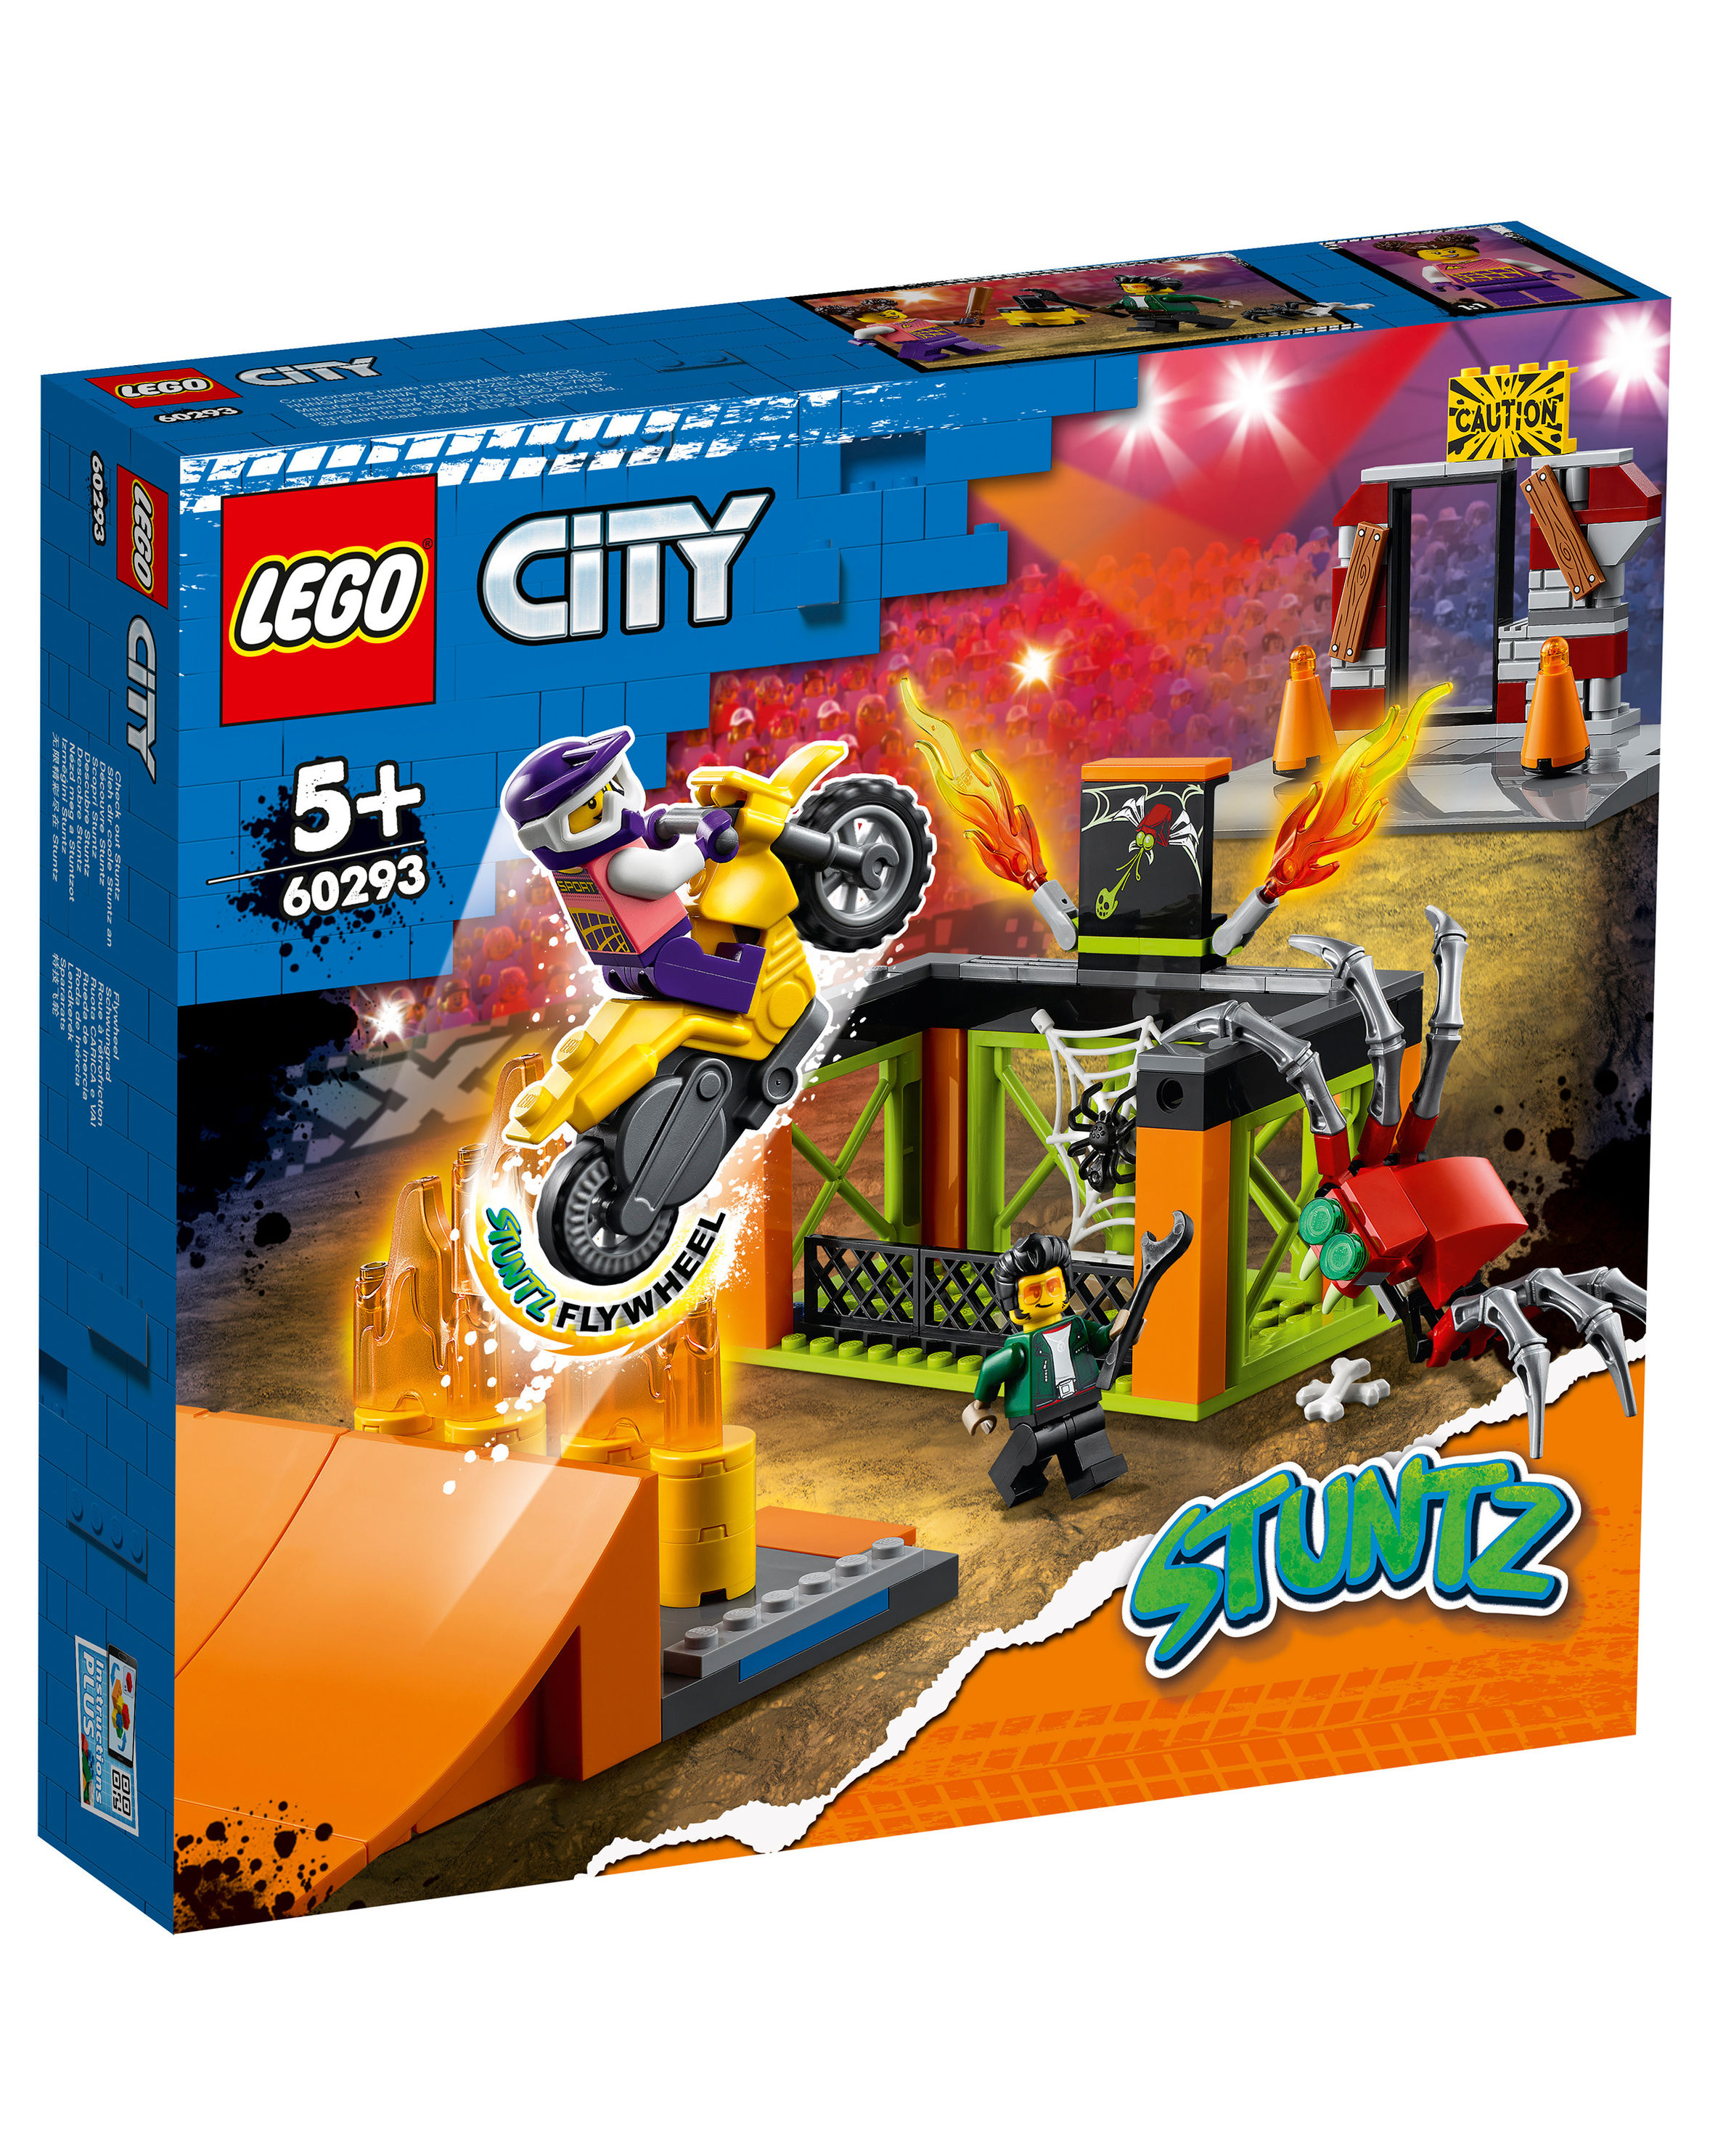 LEGO® City 60293 Stunt-Park jetzt bei Weltbild.de bestellen